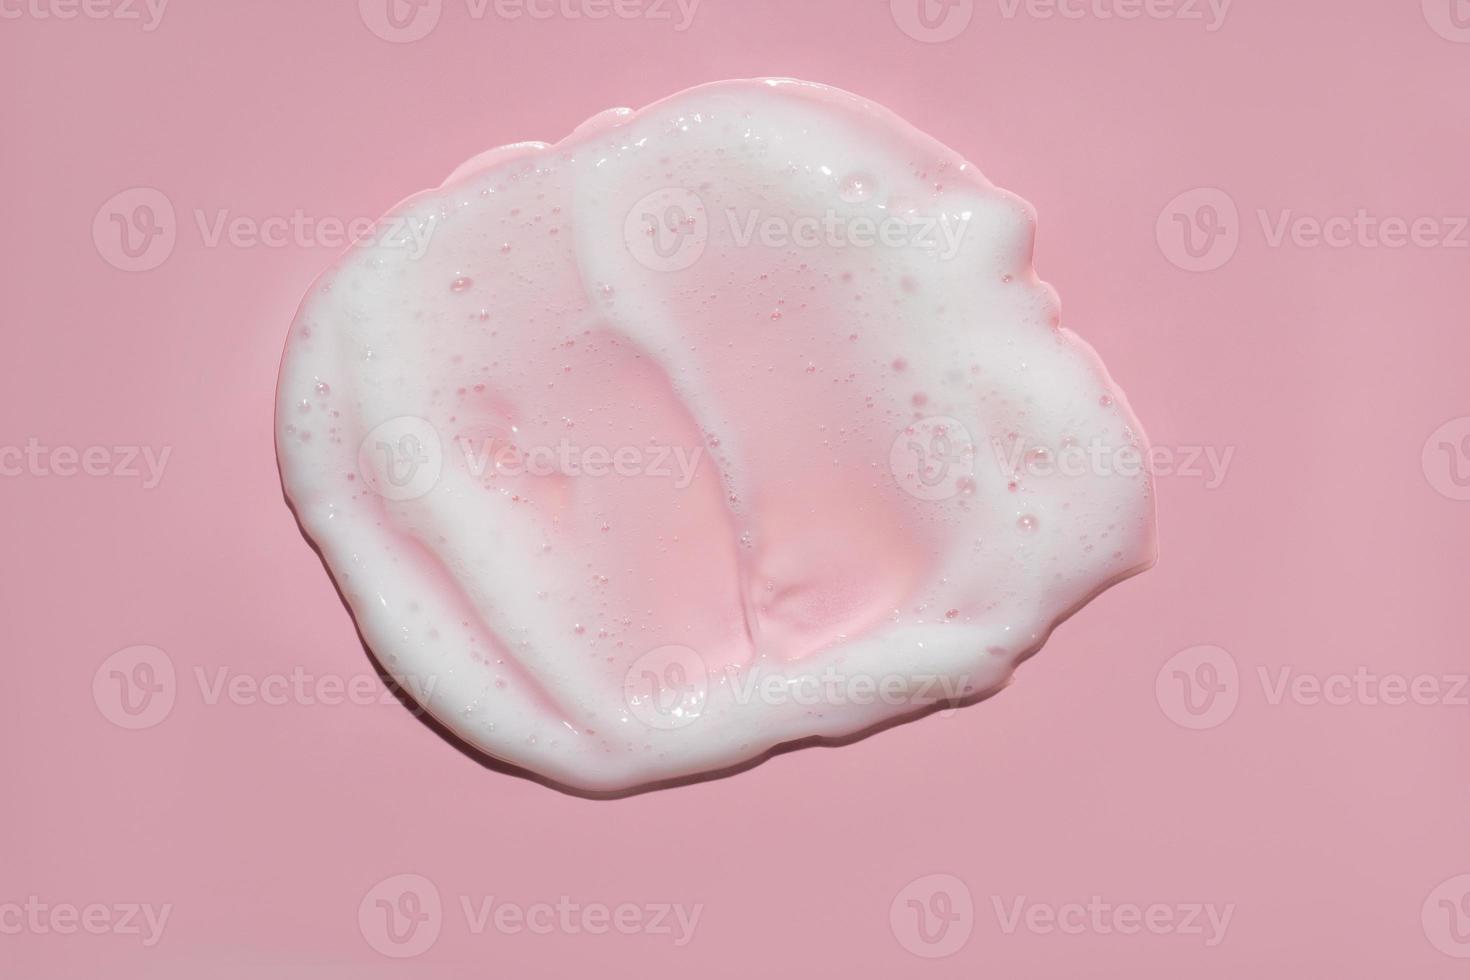 bianca schiuma schiuma idratante detersivo su rosa foto